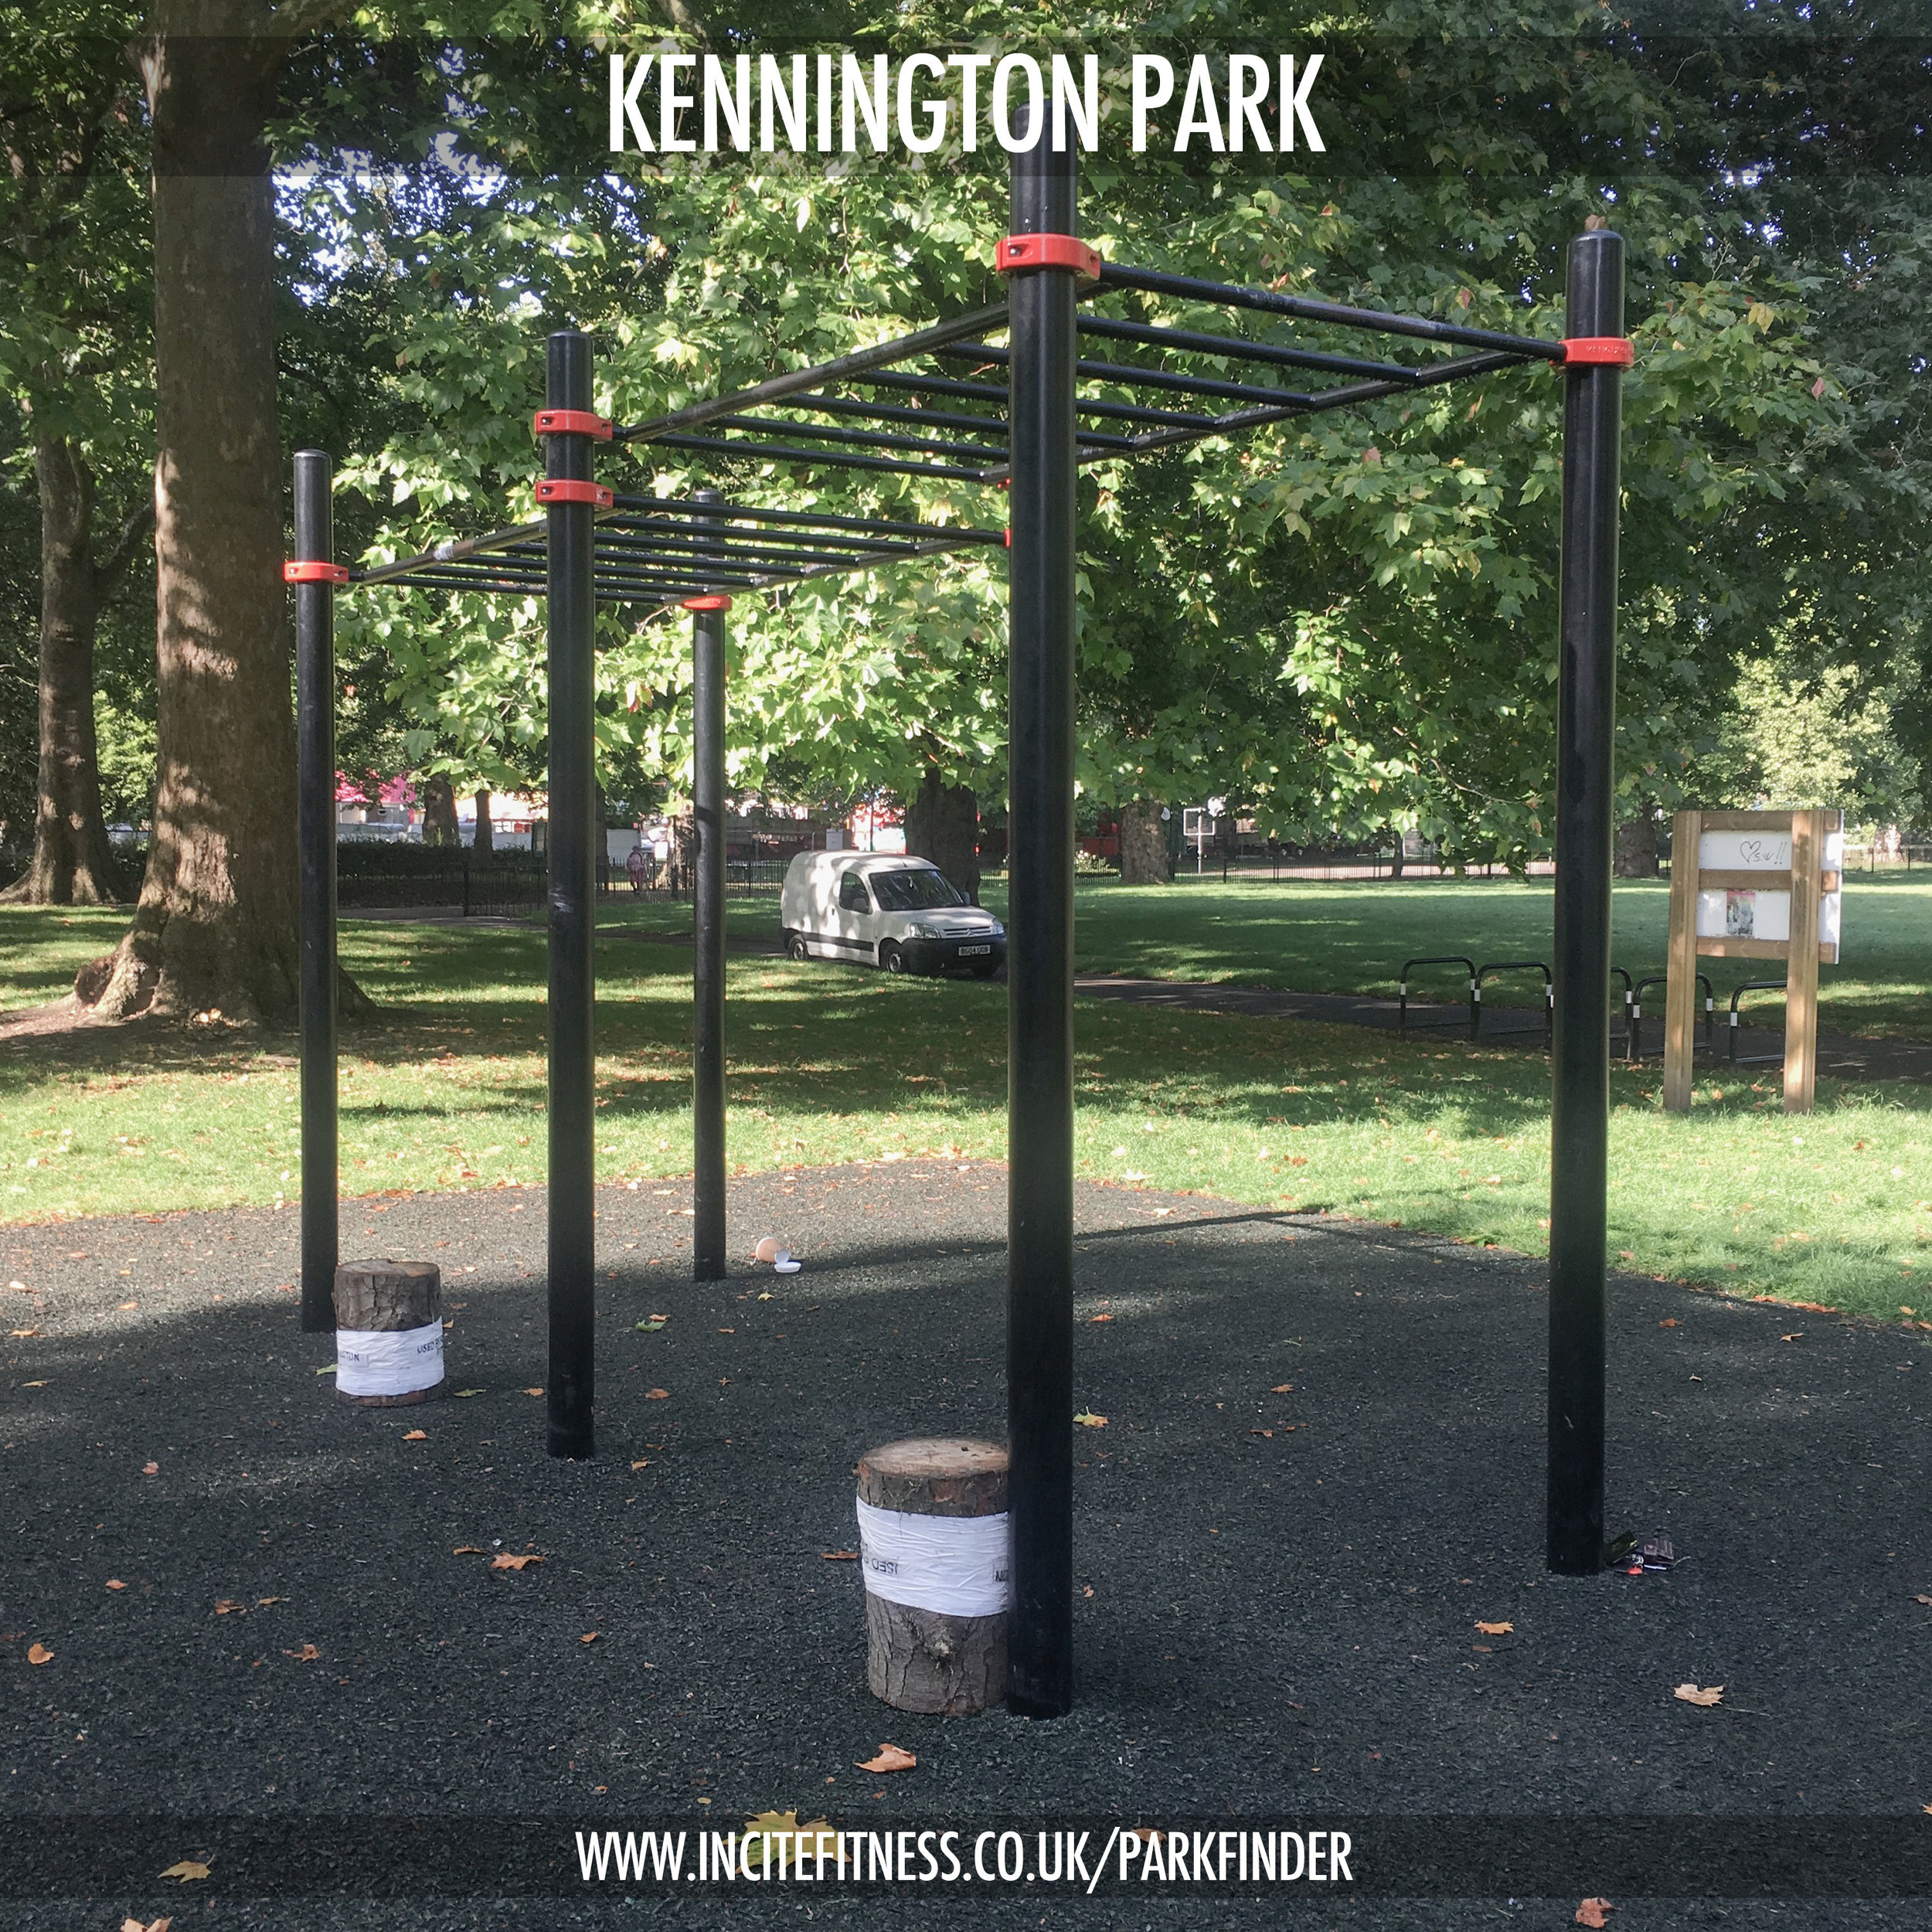 Kennington park 05 monkey bars.jpg